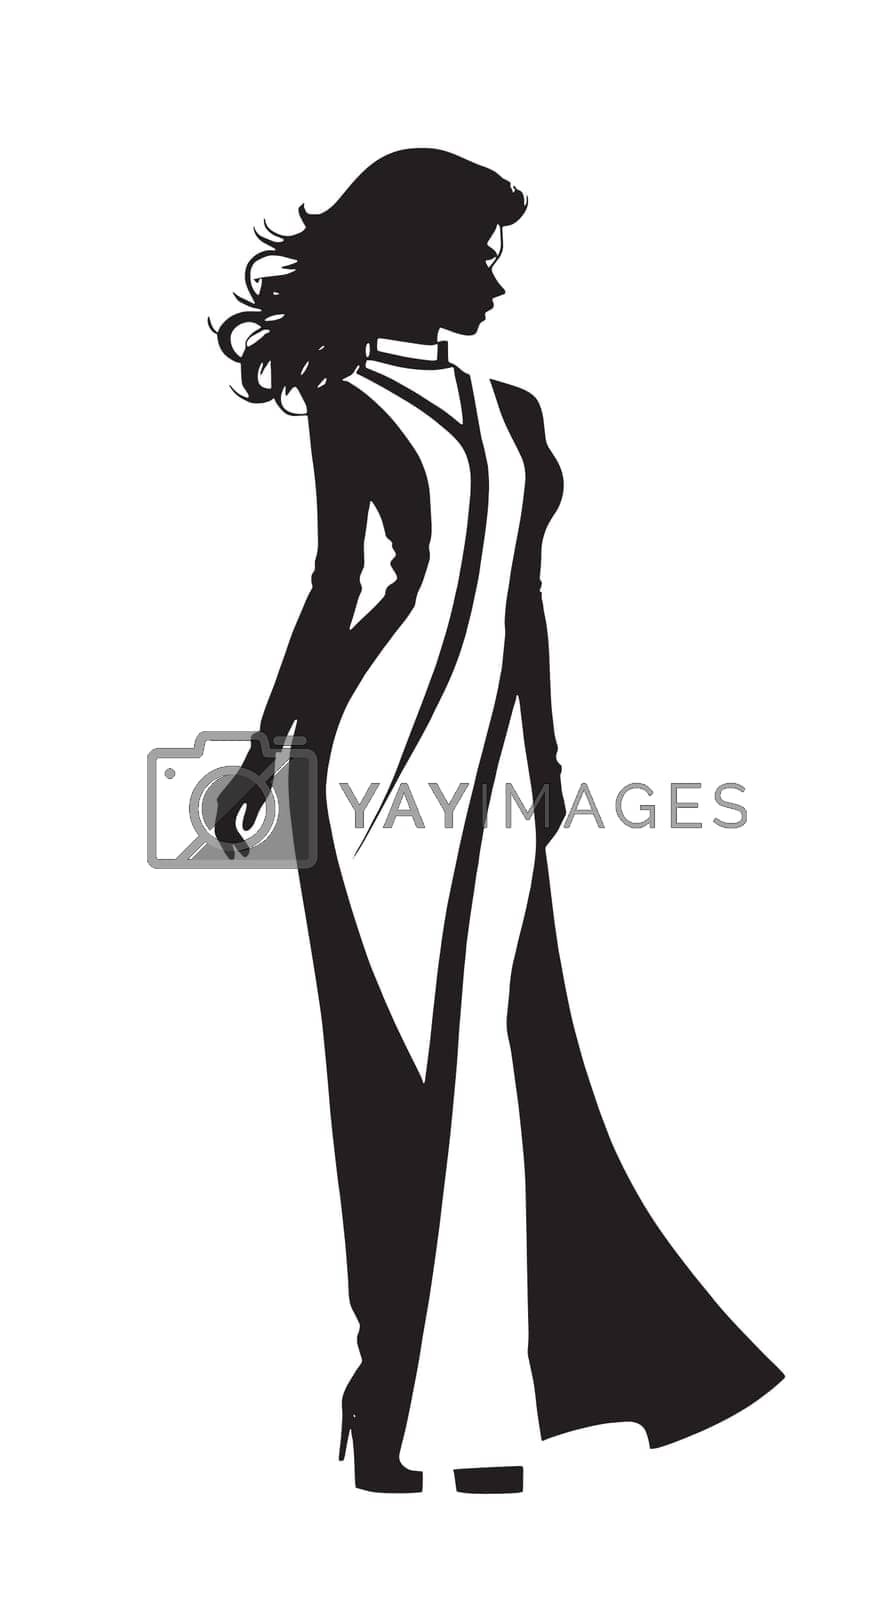 Royalty free image of Black and white fashion model. by yilmazsavaskandag